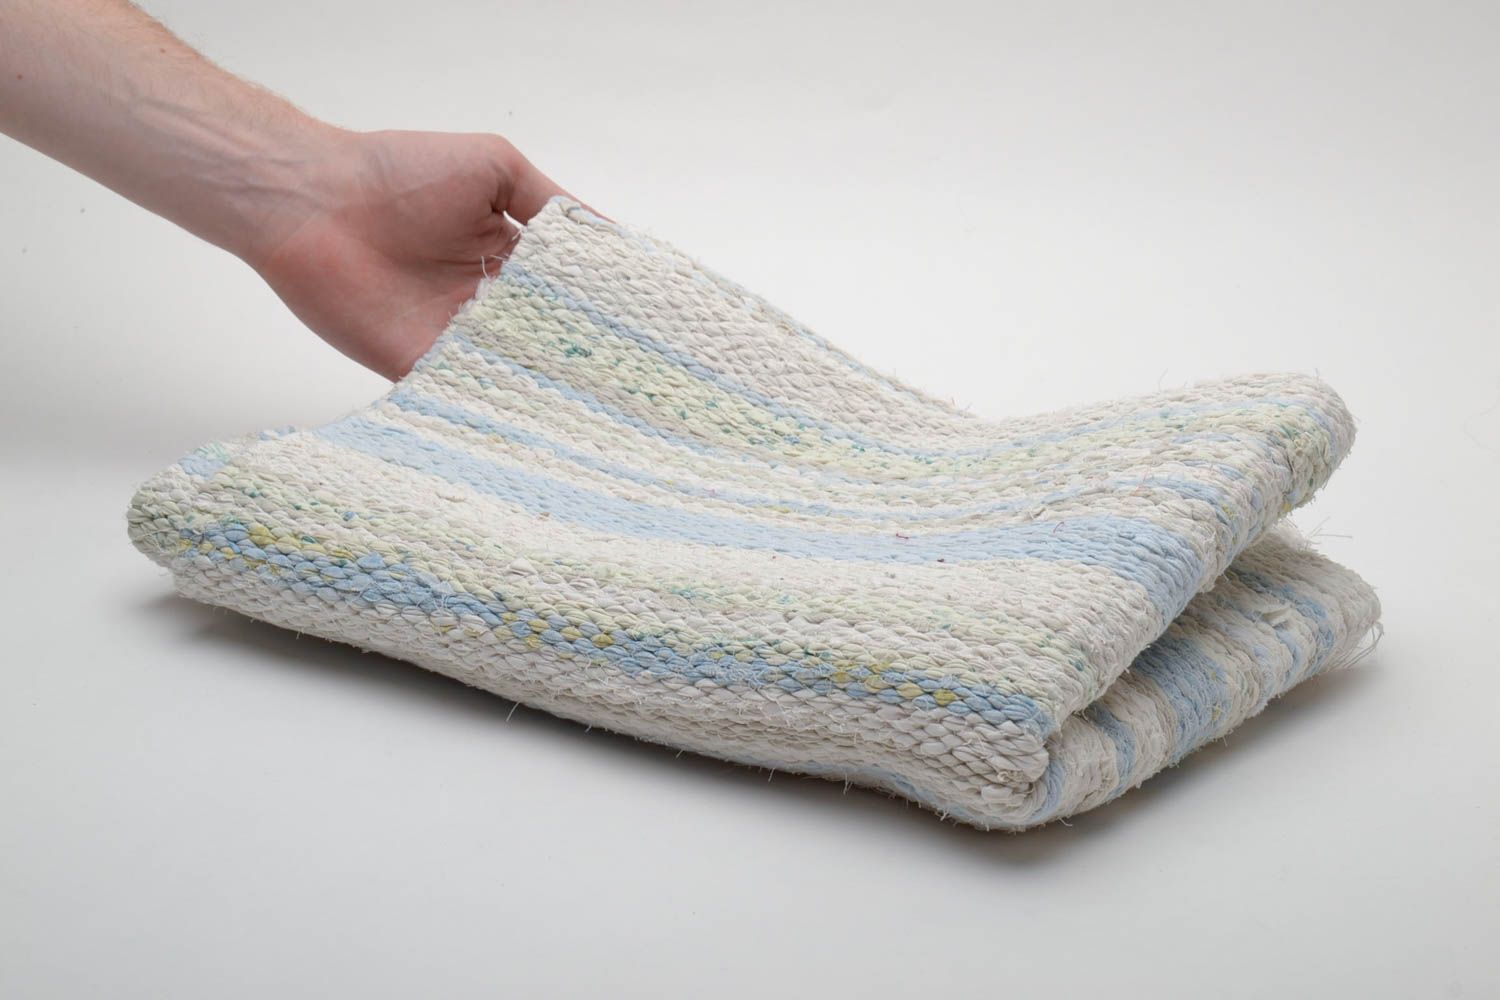 Hand woven rug made of natural materials photo 5